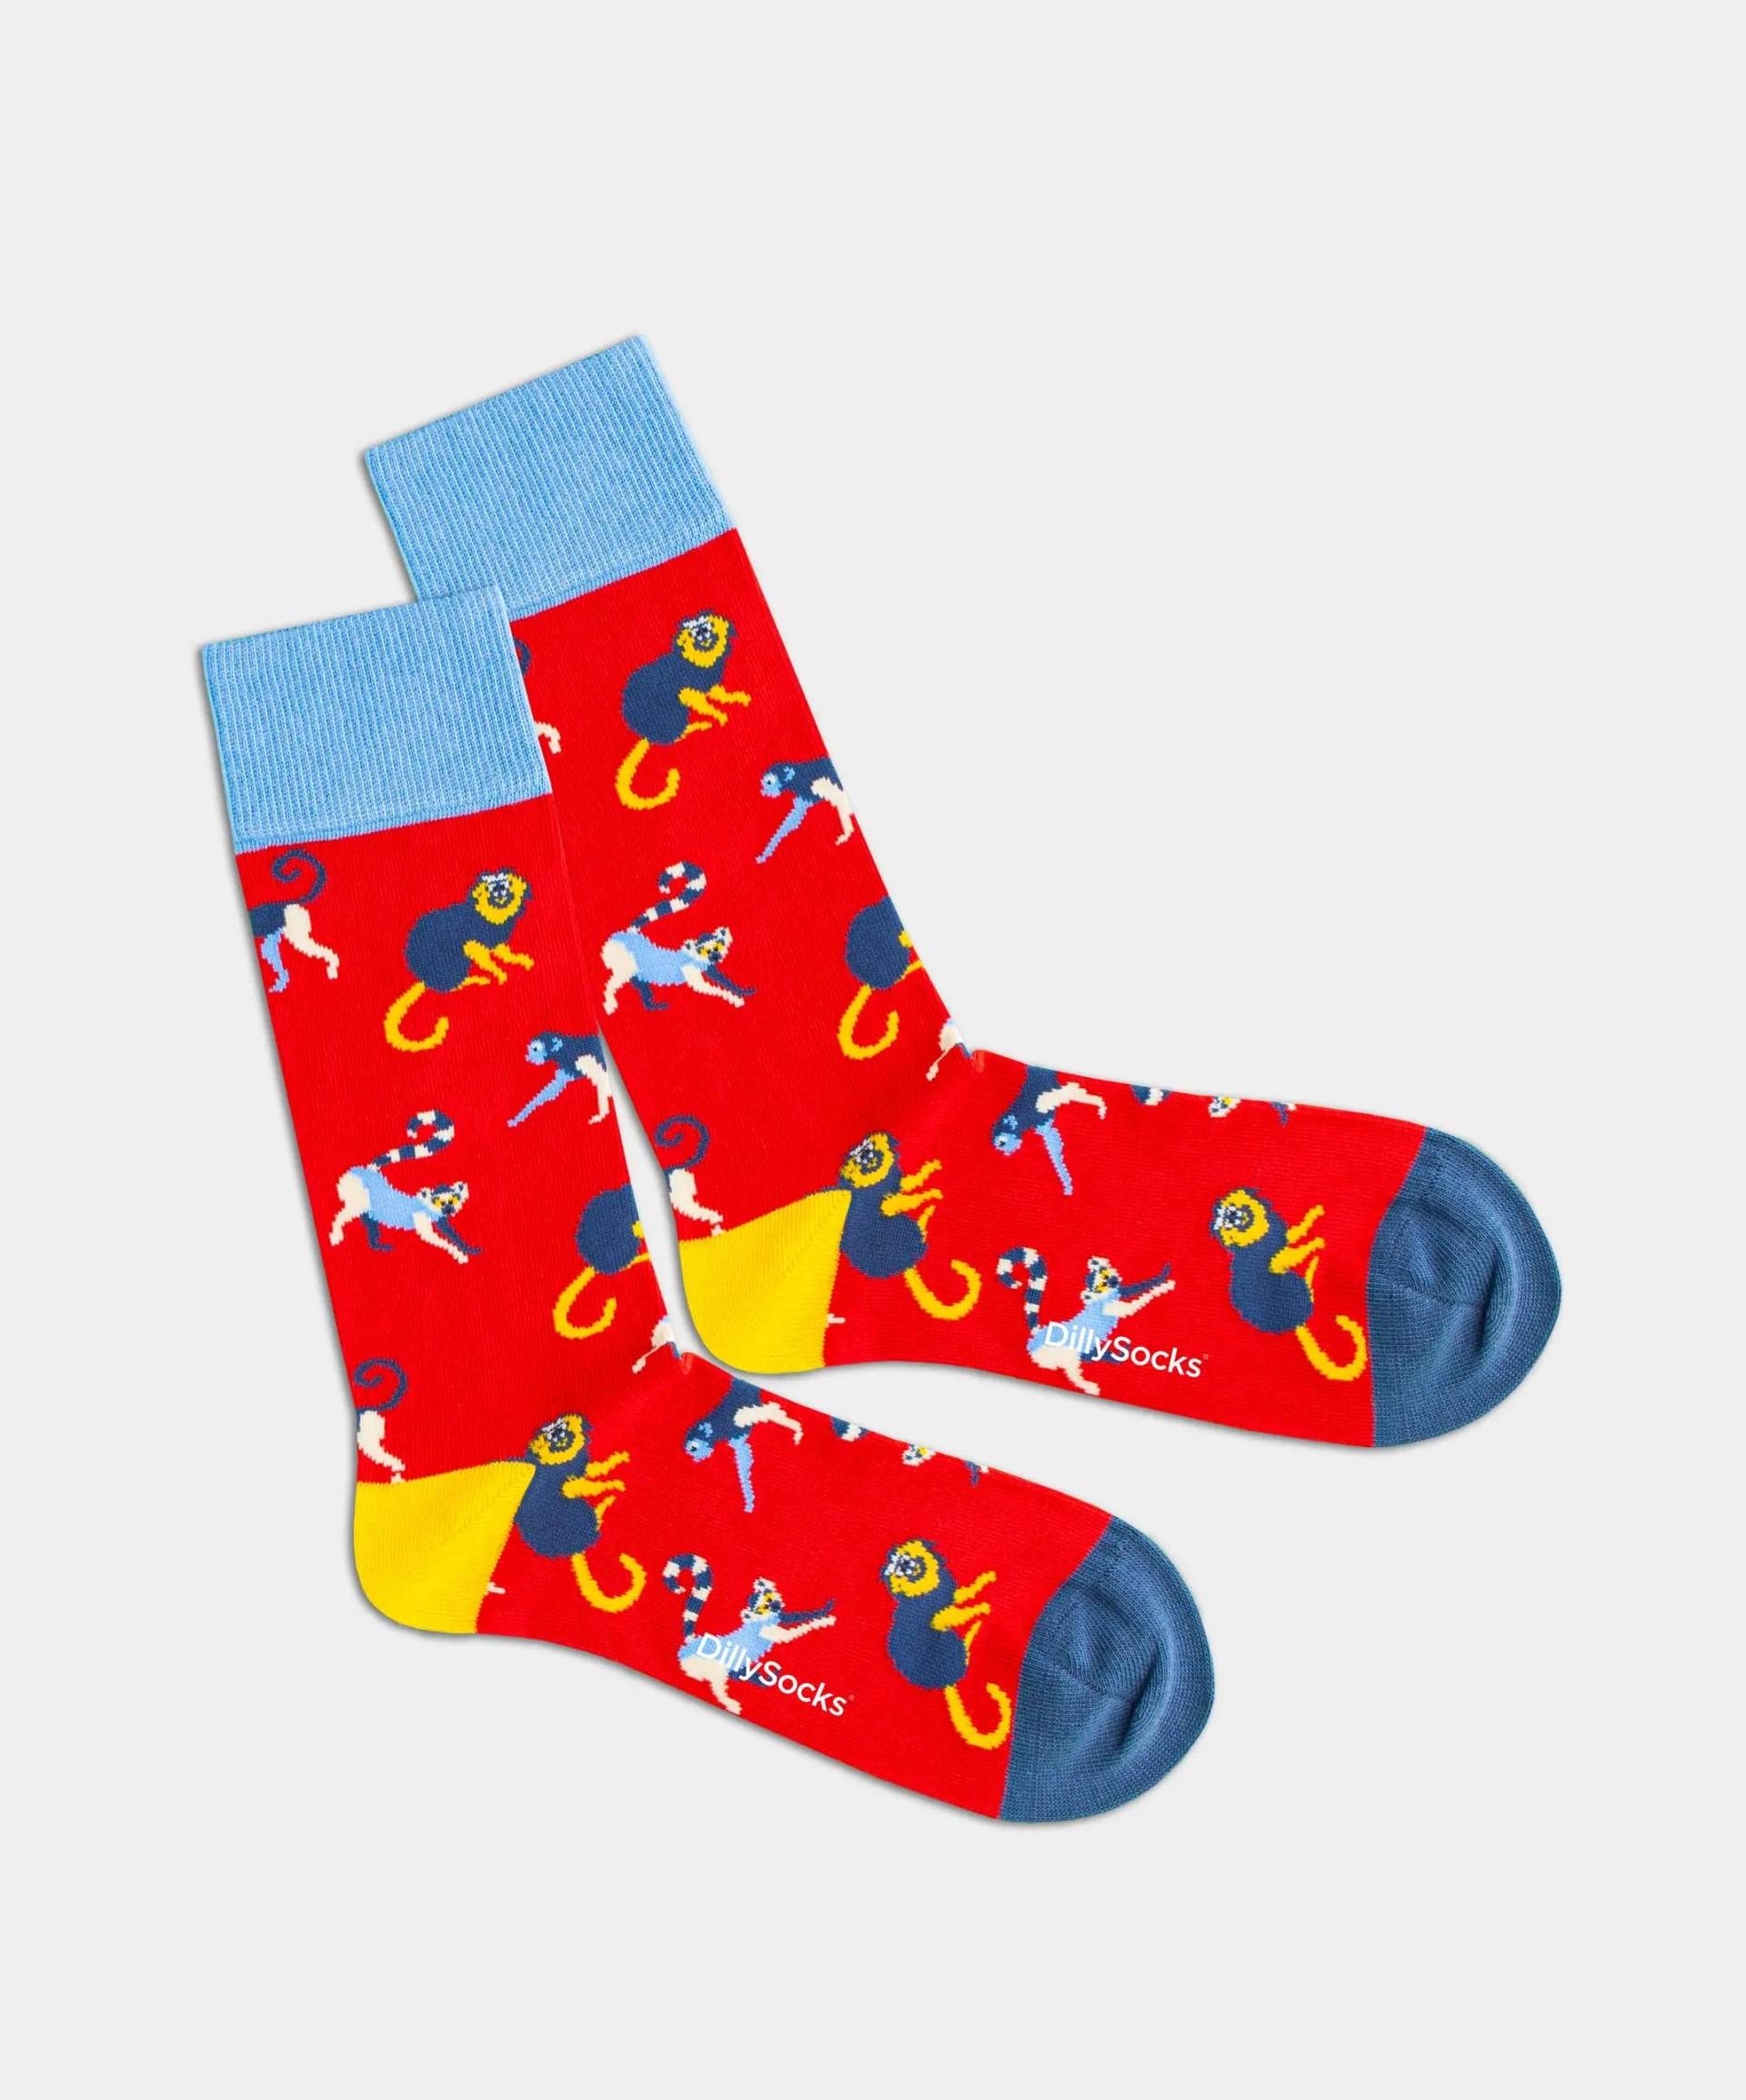 - Socken in Rot mit Tier Motiv/Muster von DillySocks